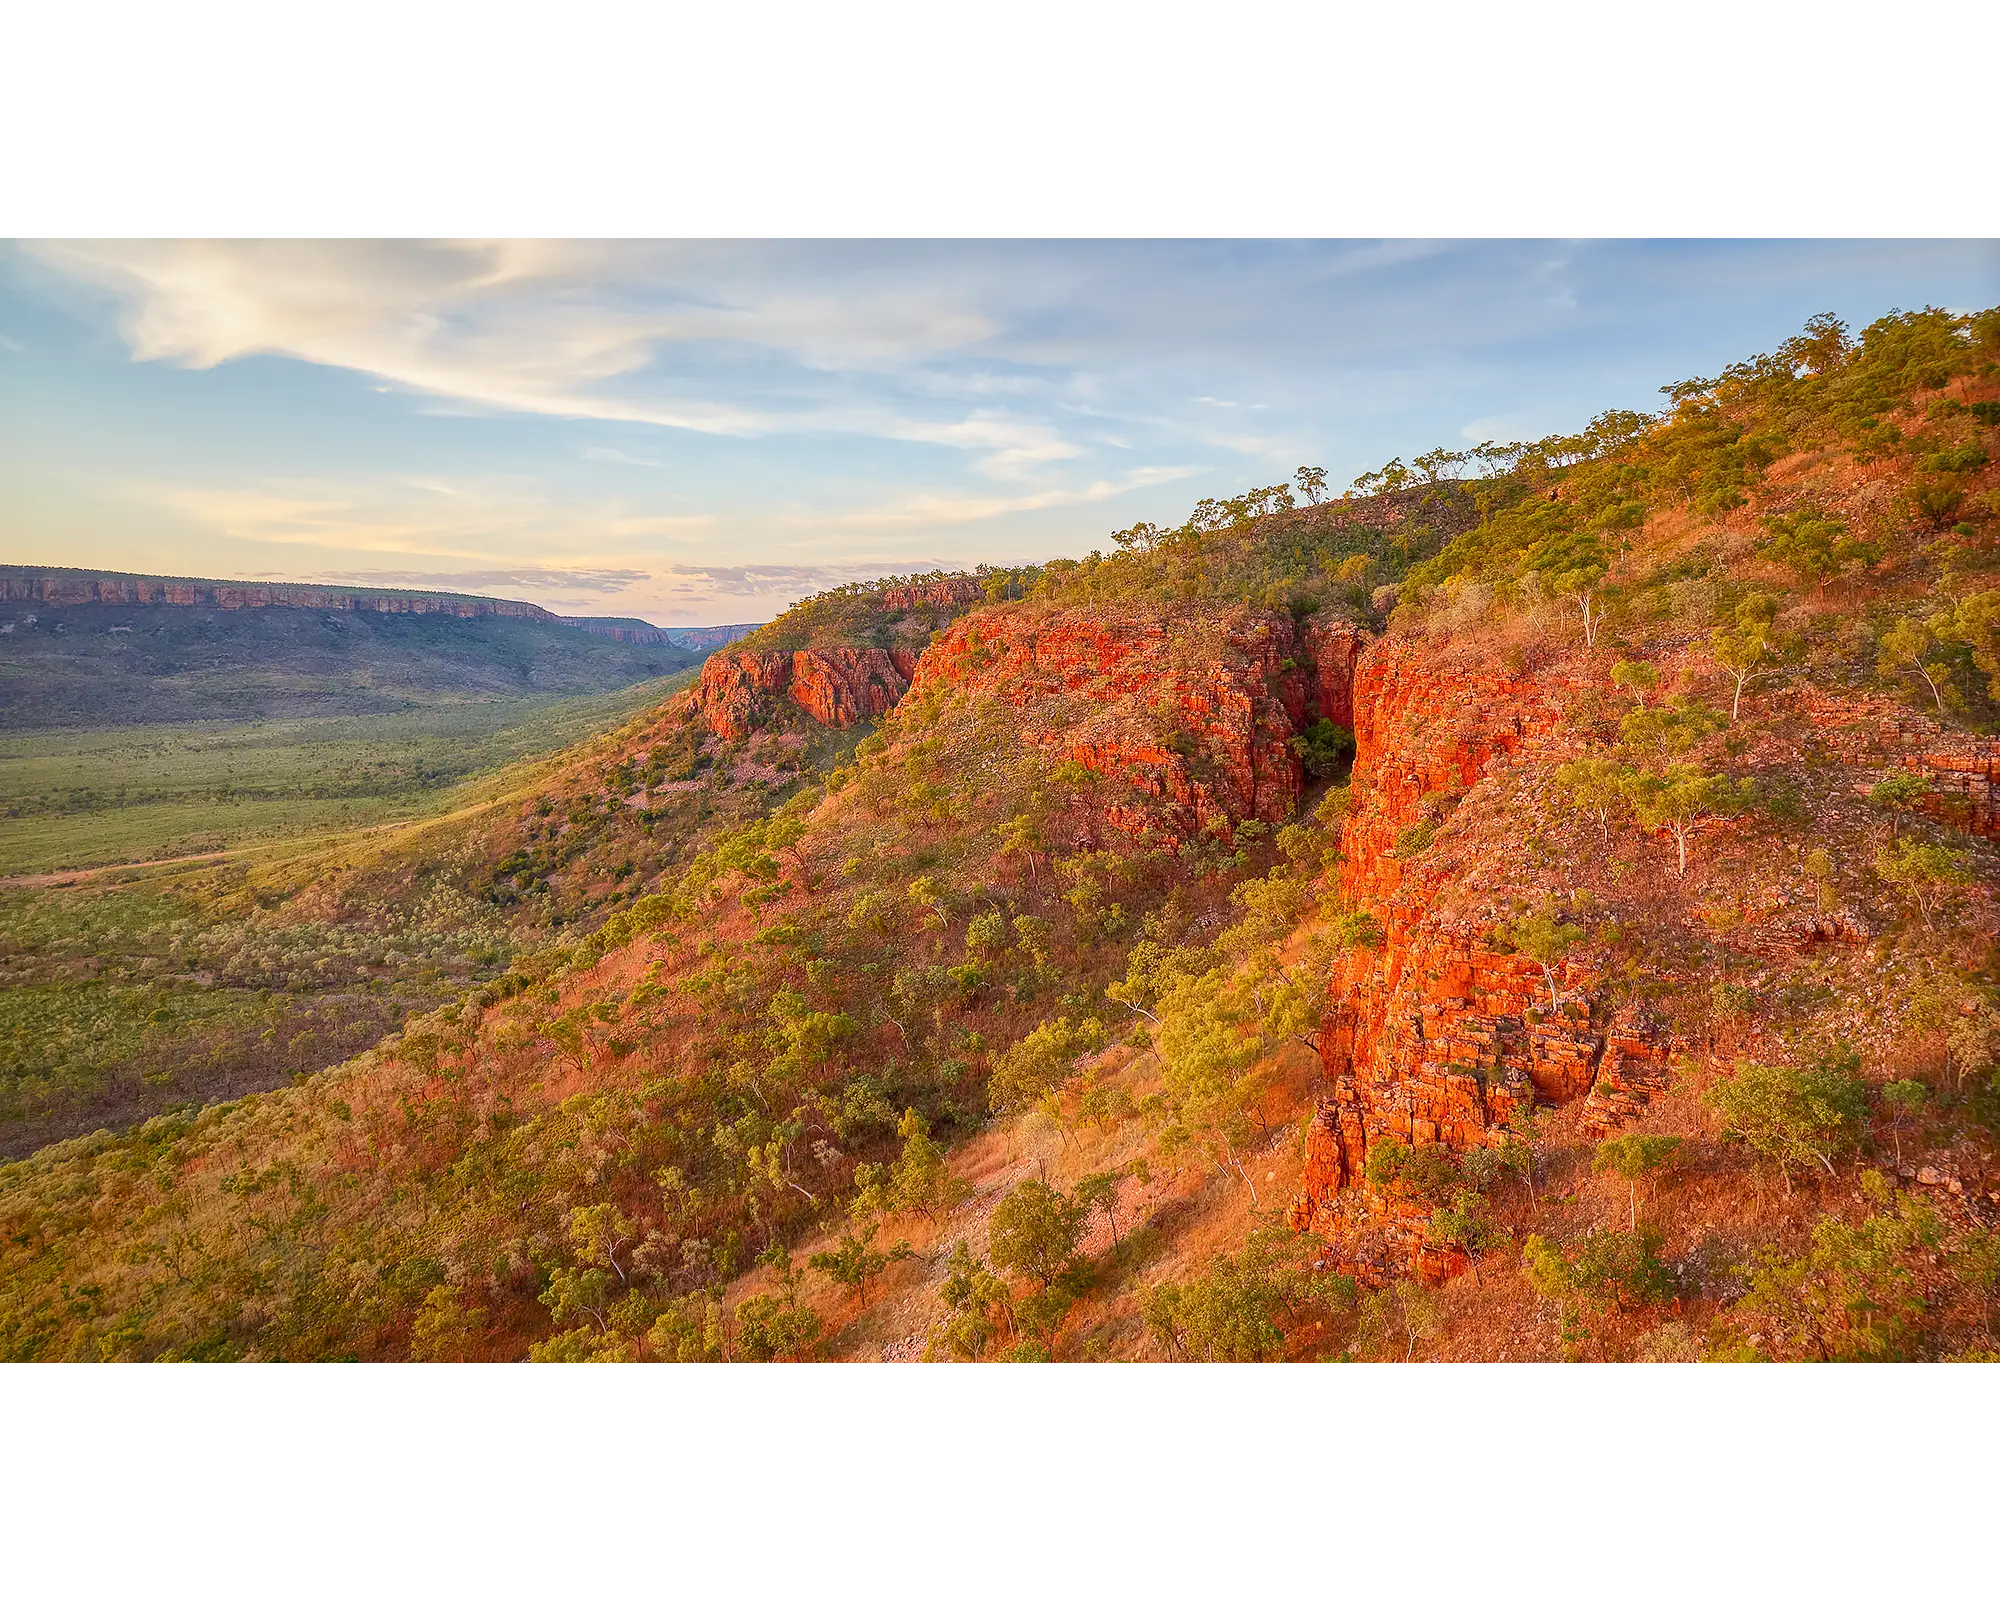 Enduring. Sunset on the Cockburn Ranges in The Kimberley, Western Australia.